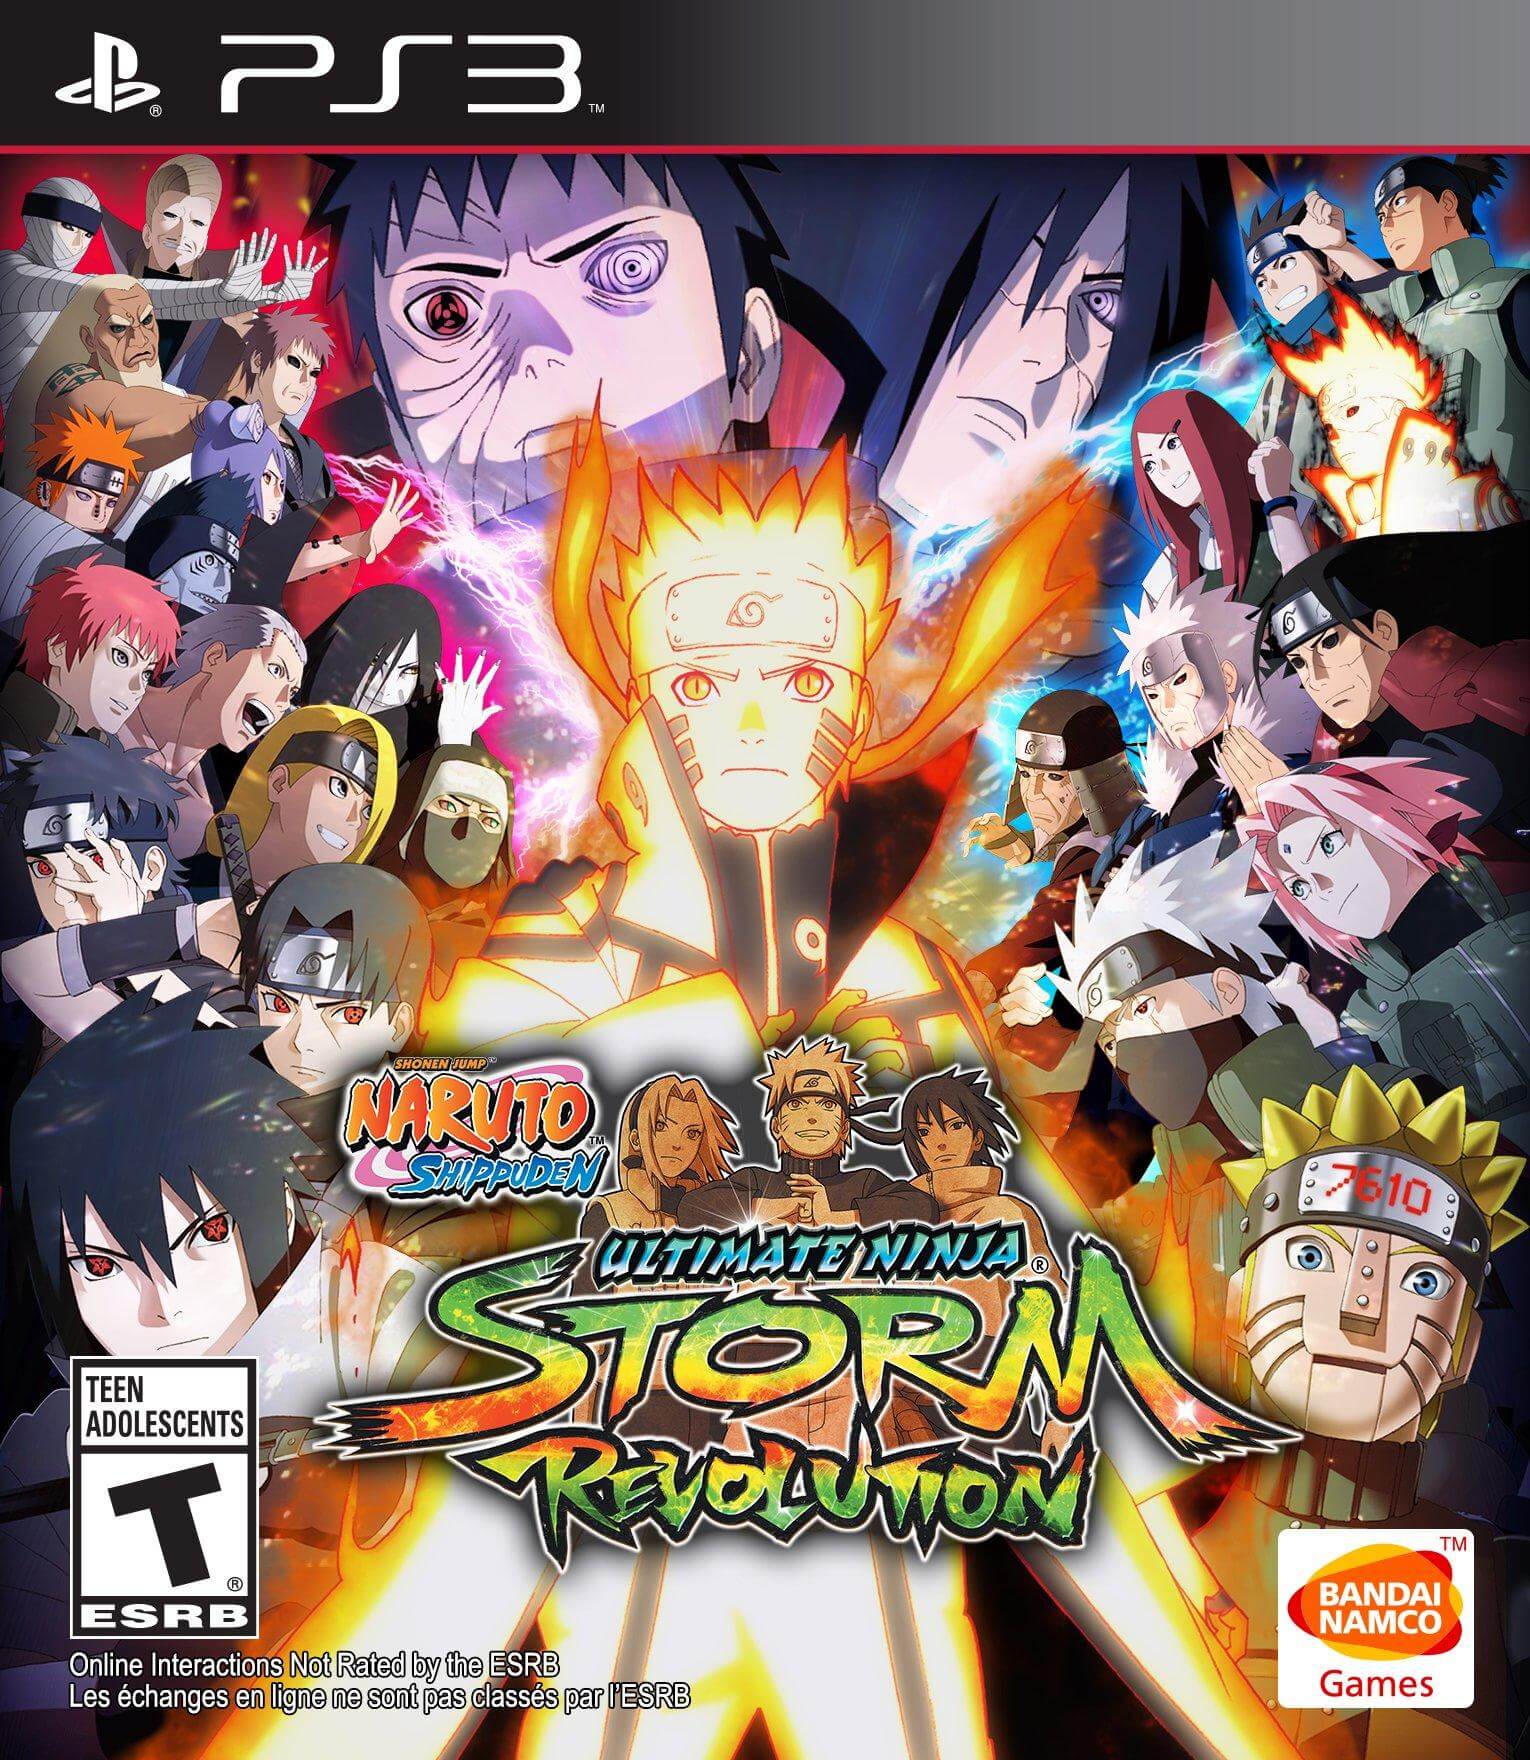 Naruto Shippuden – Ultimate Ninja 4 ROM & ISO - PS2 Game